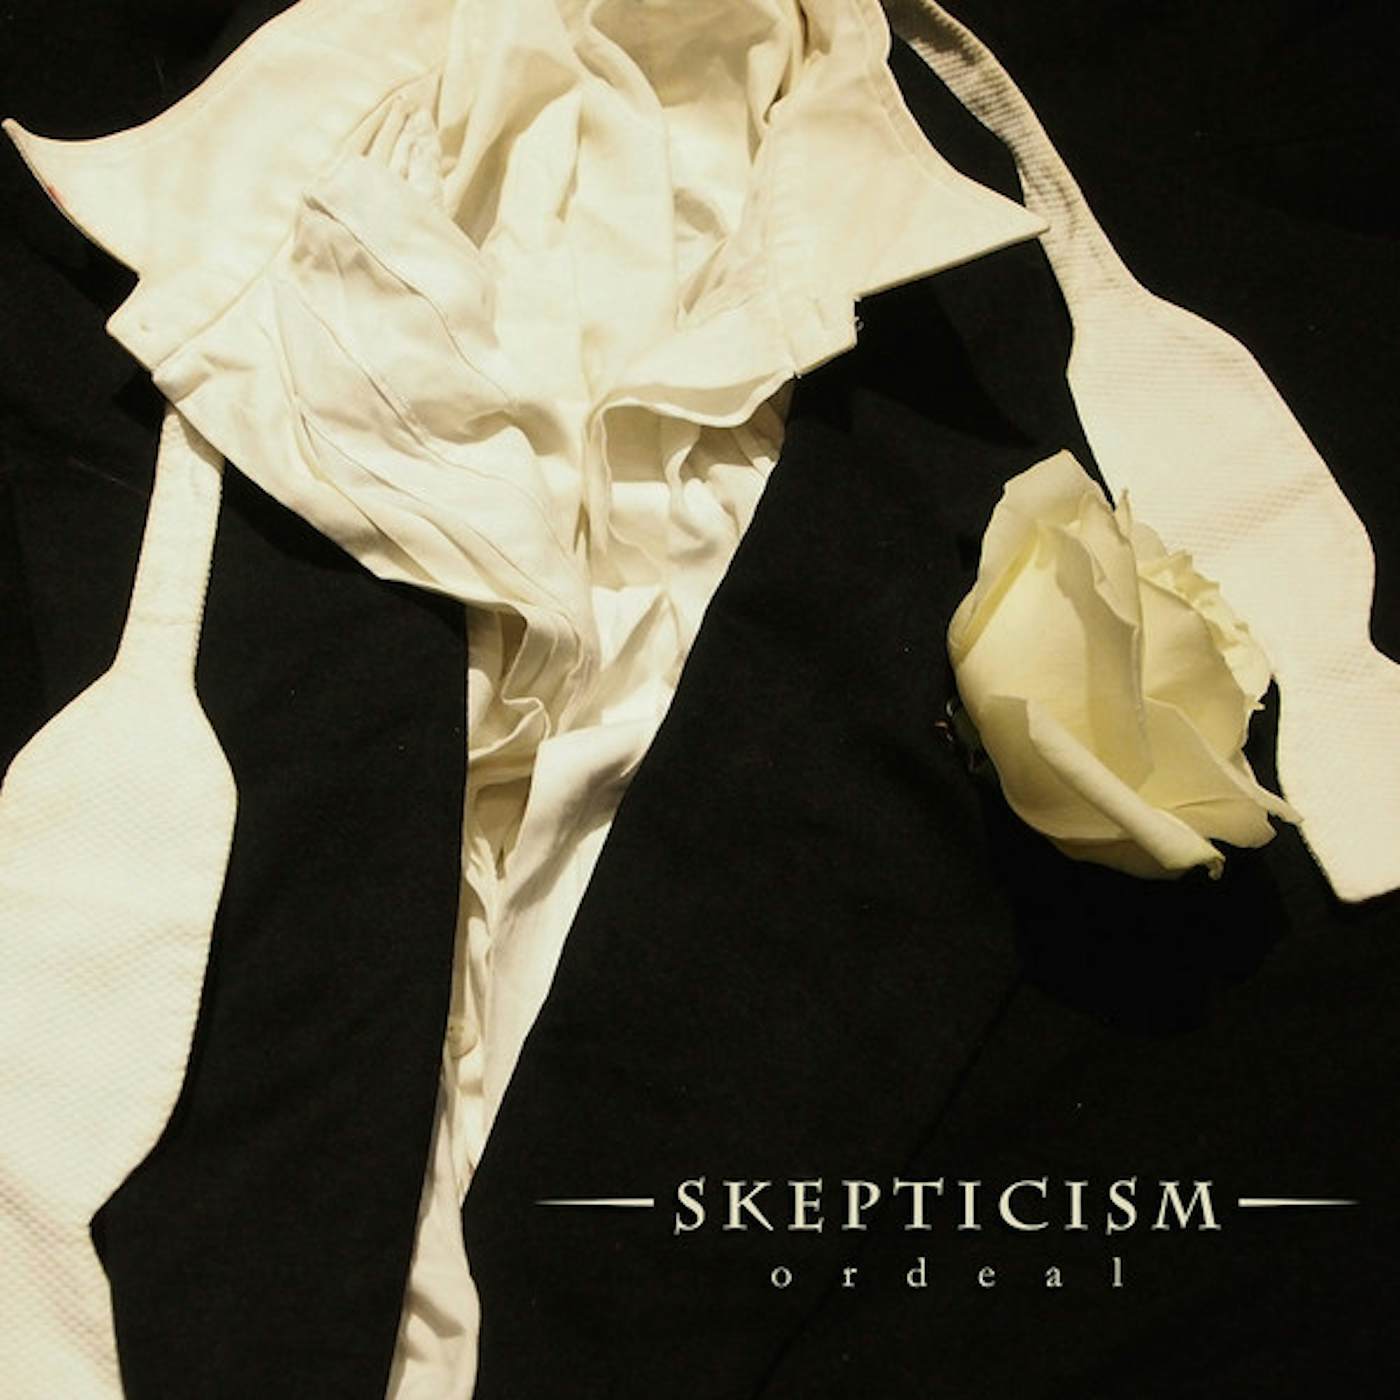 Skepticism Ordeal Vinyl Record